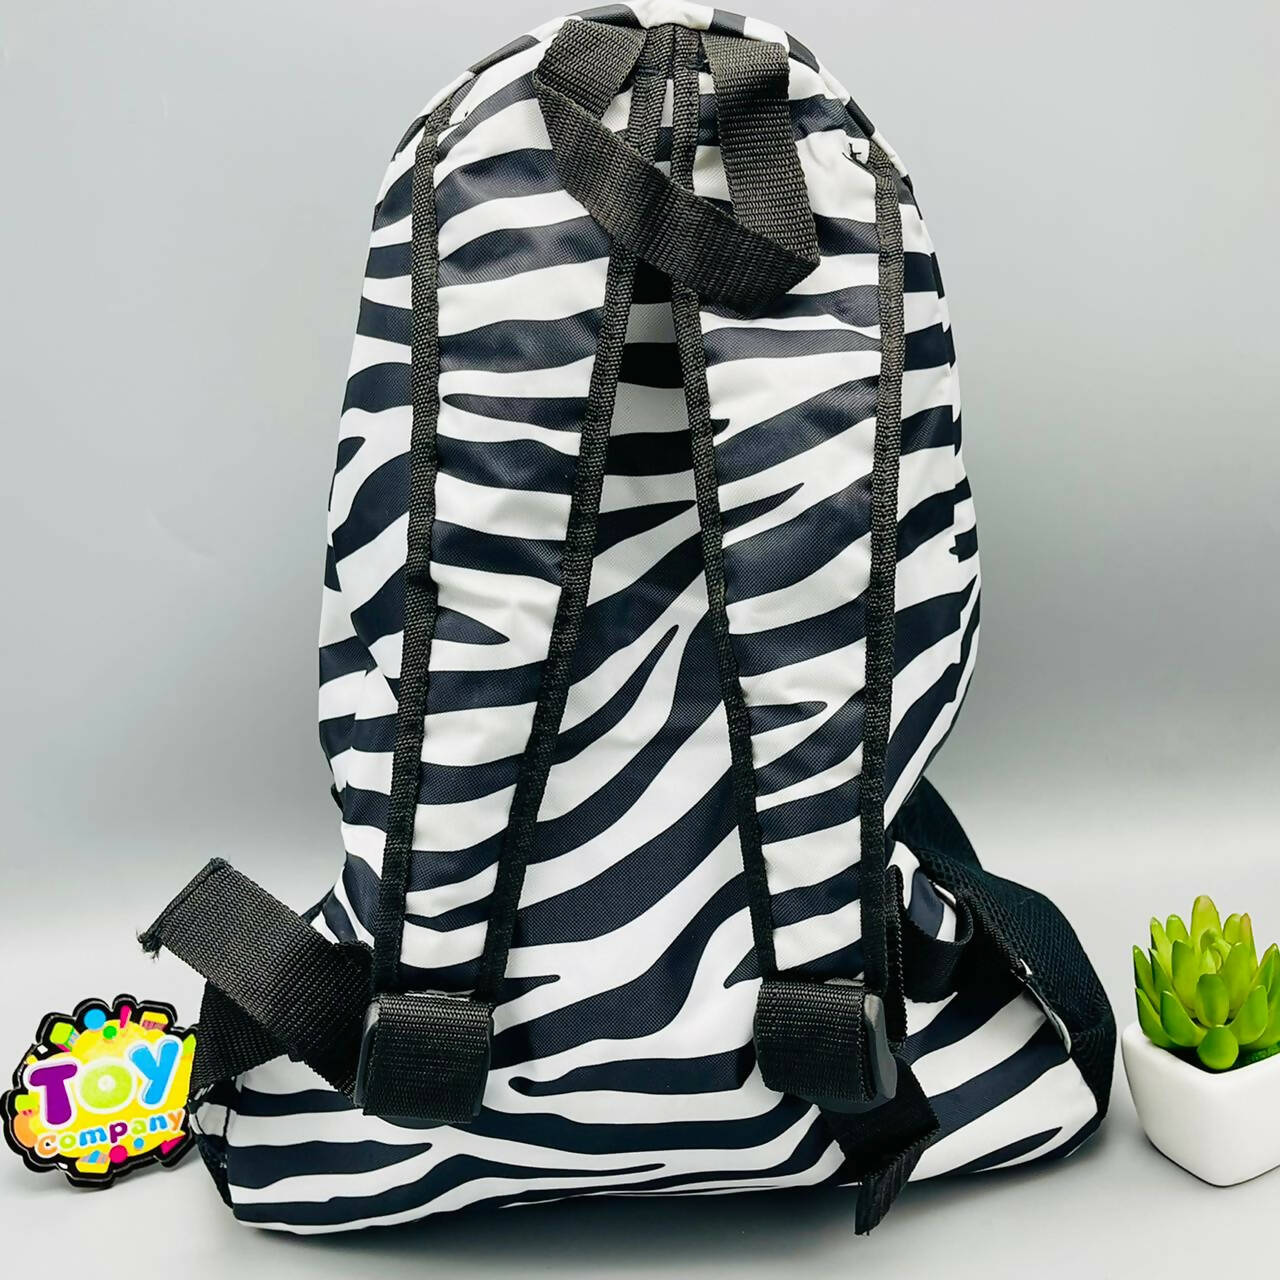 Laptop/School/College Bag – Zebra Design